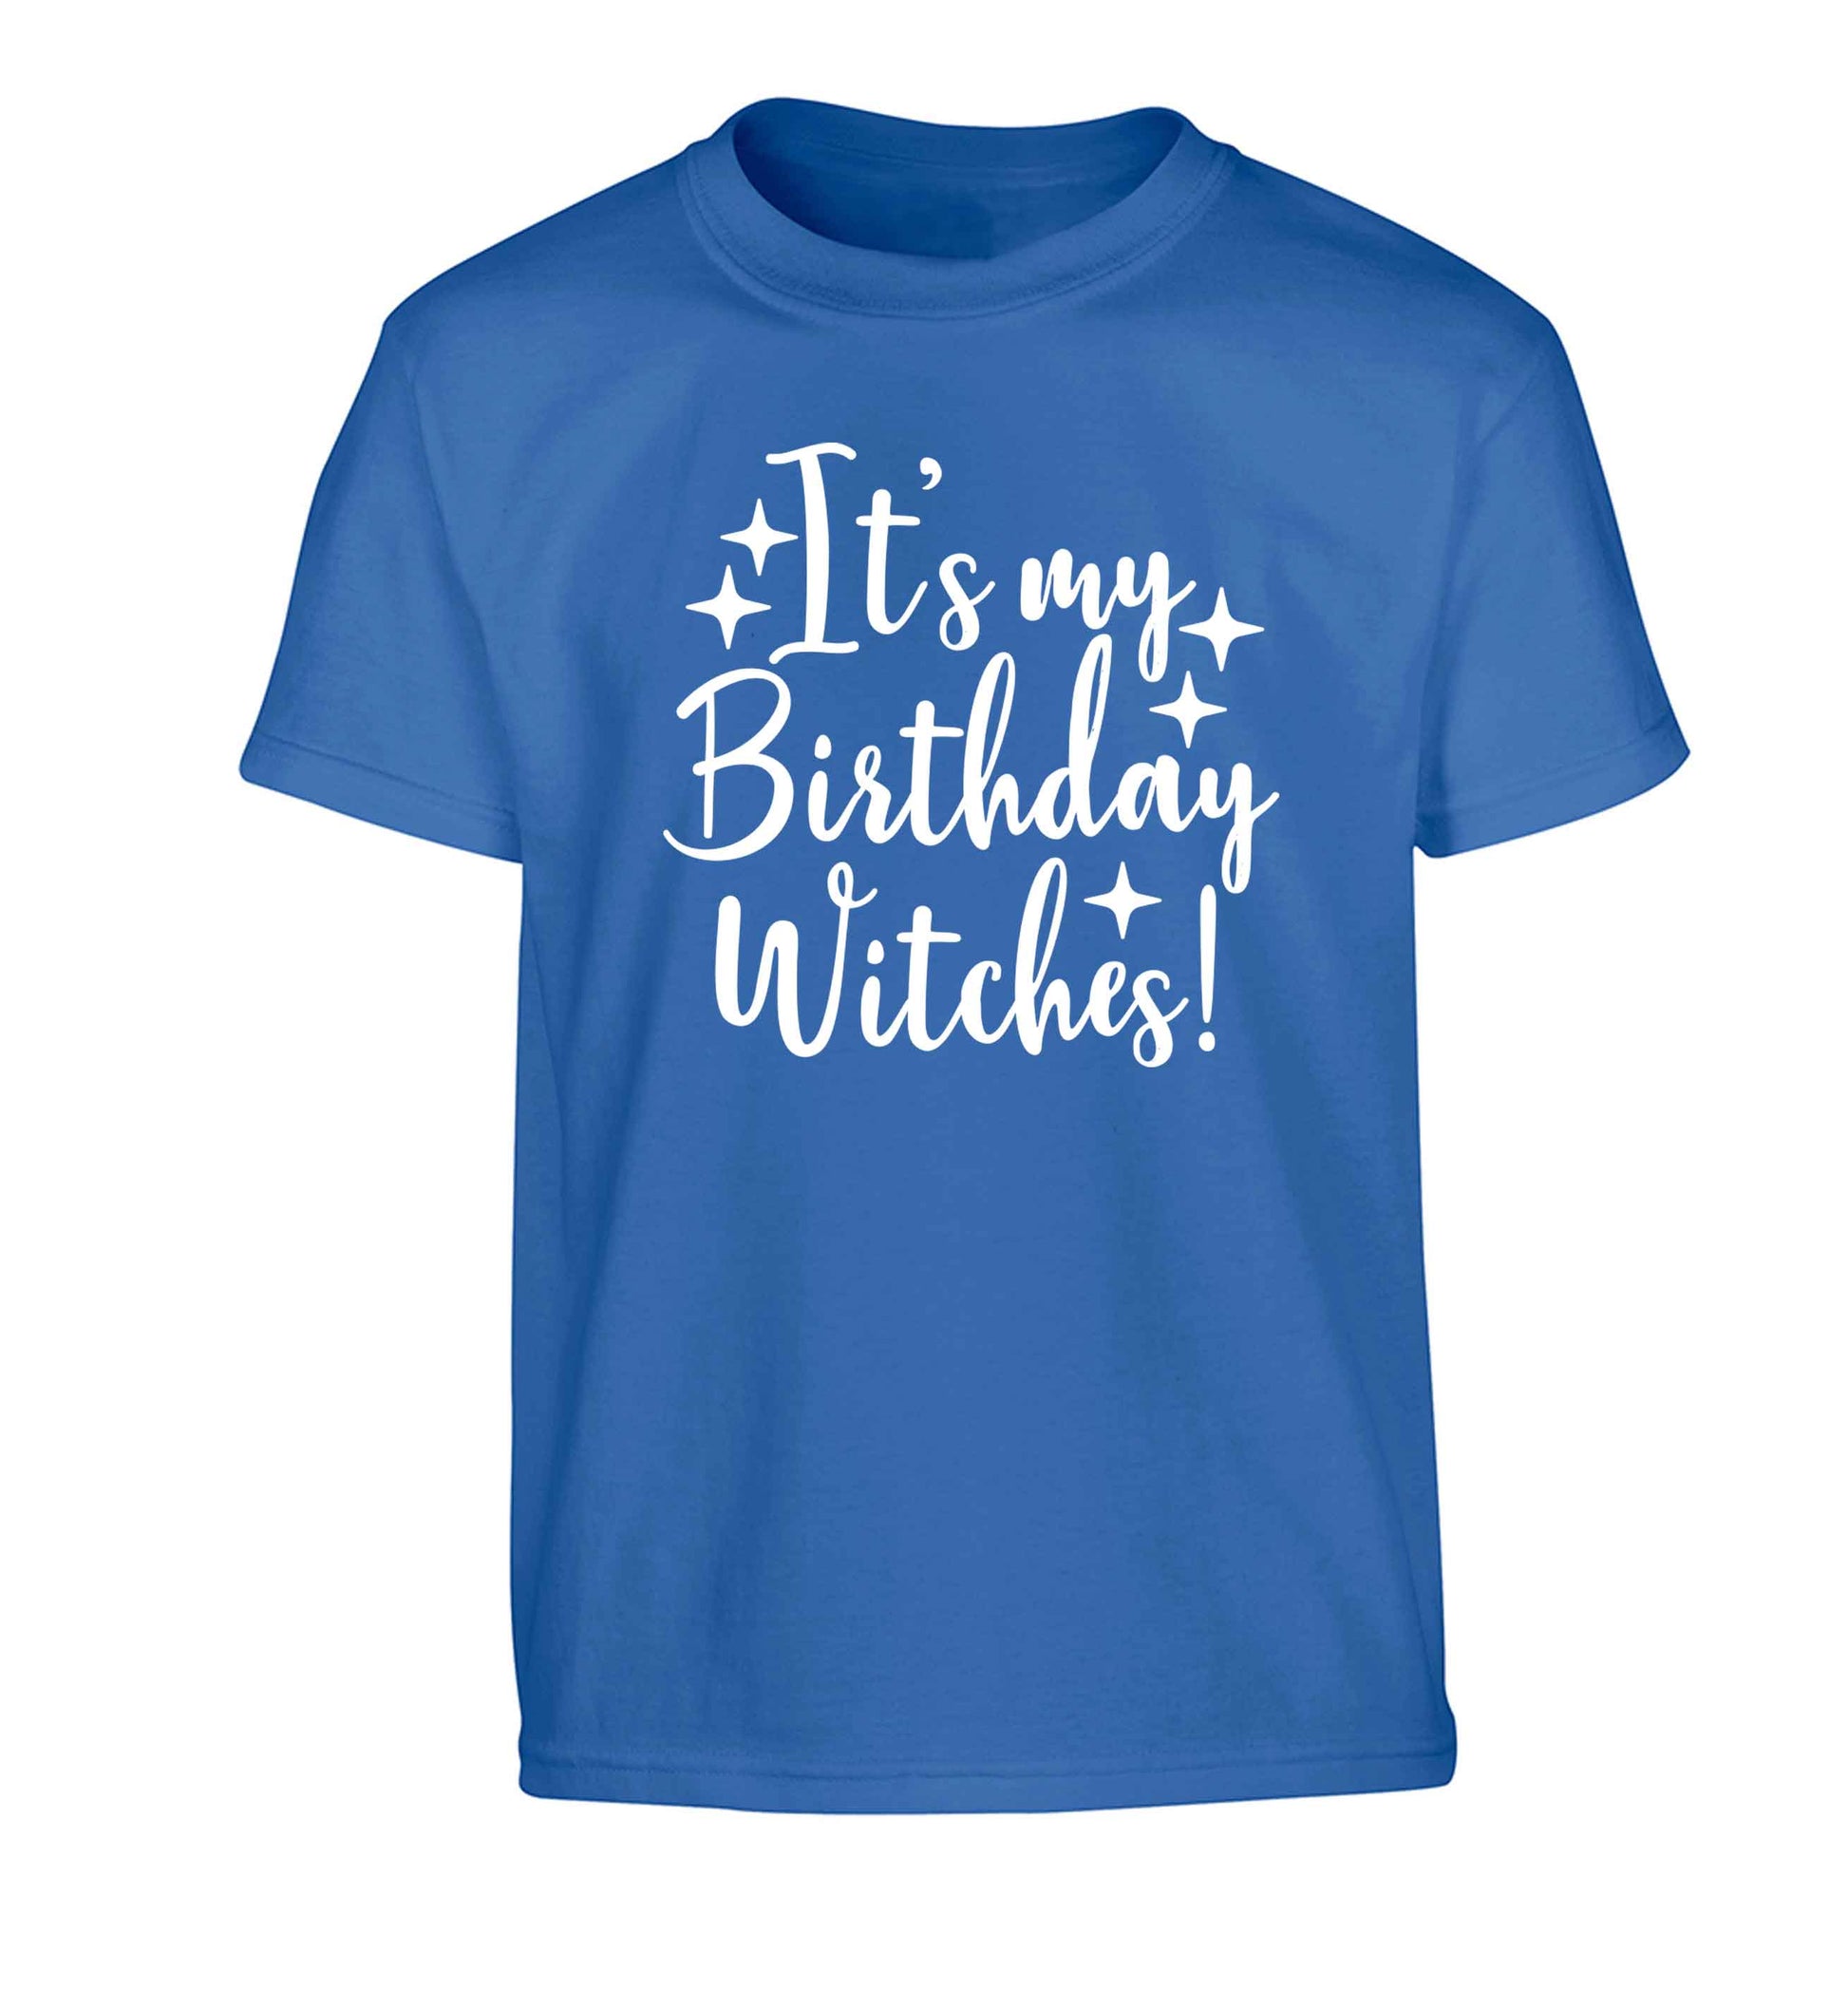 It's my birthday witches!Children's blue Tshirt 12-13 Years